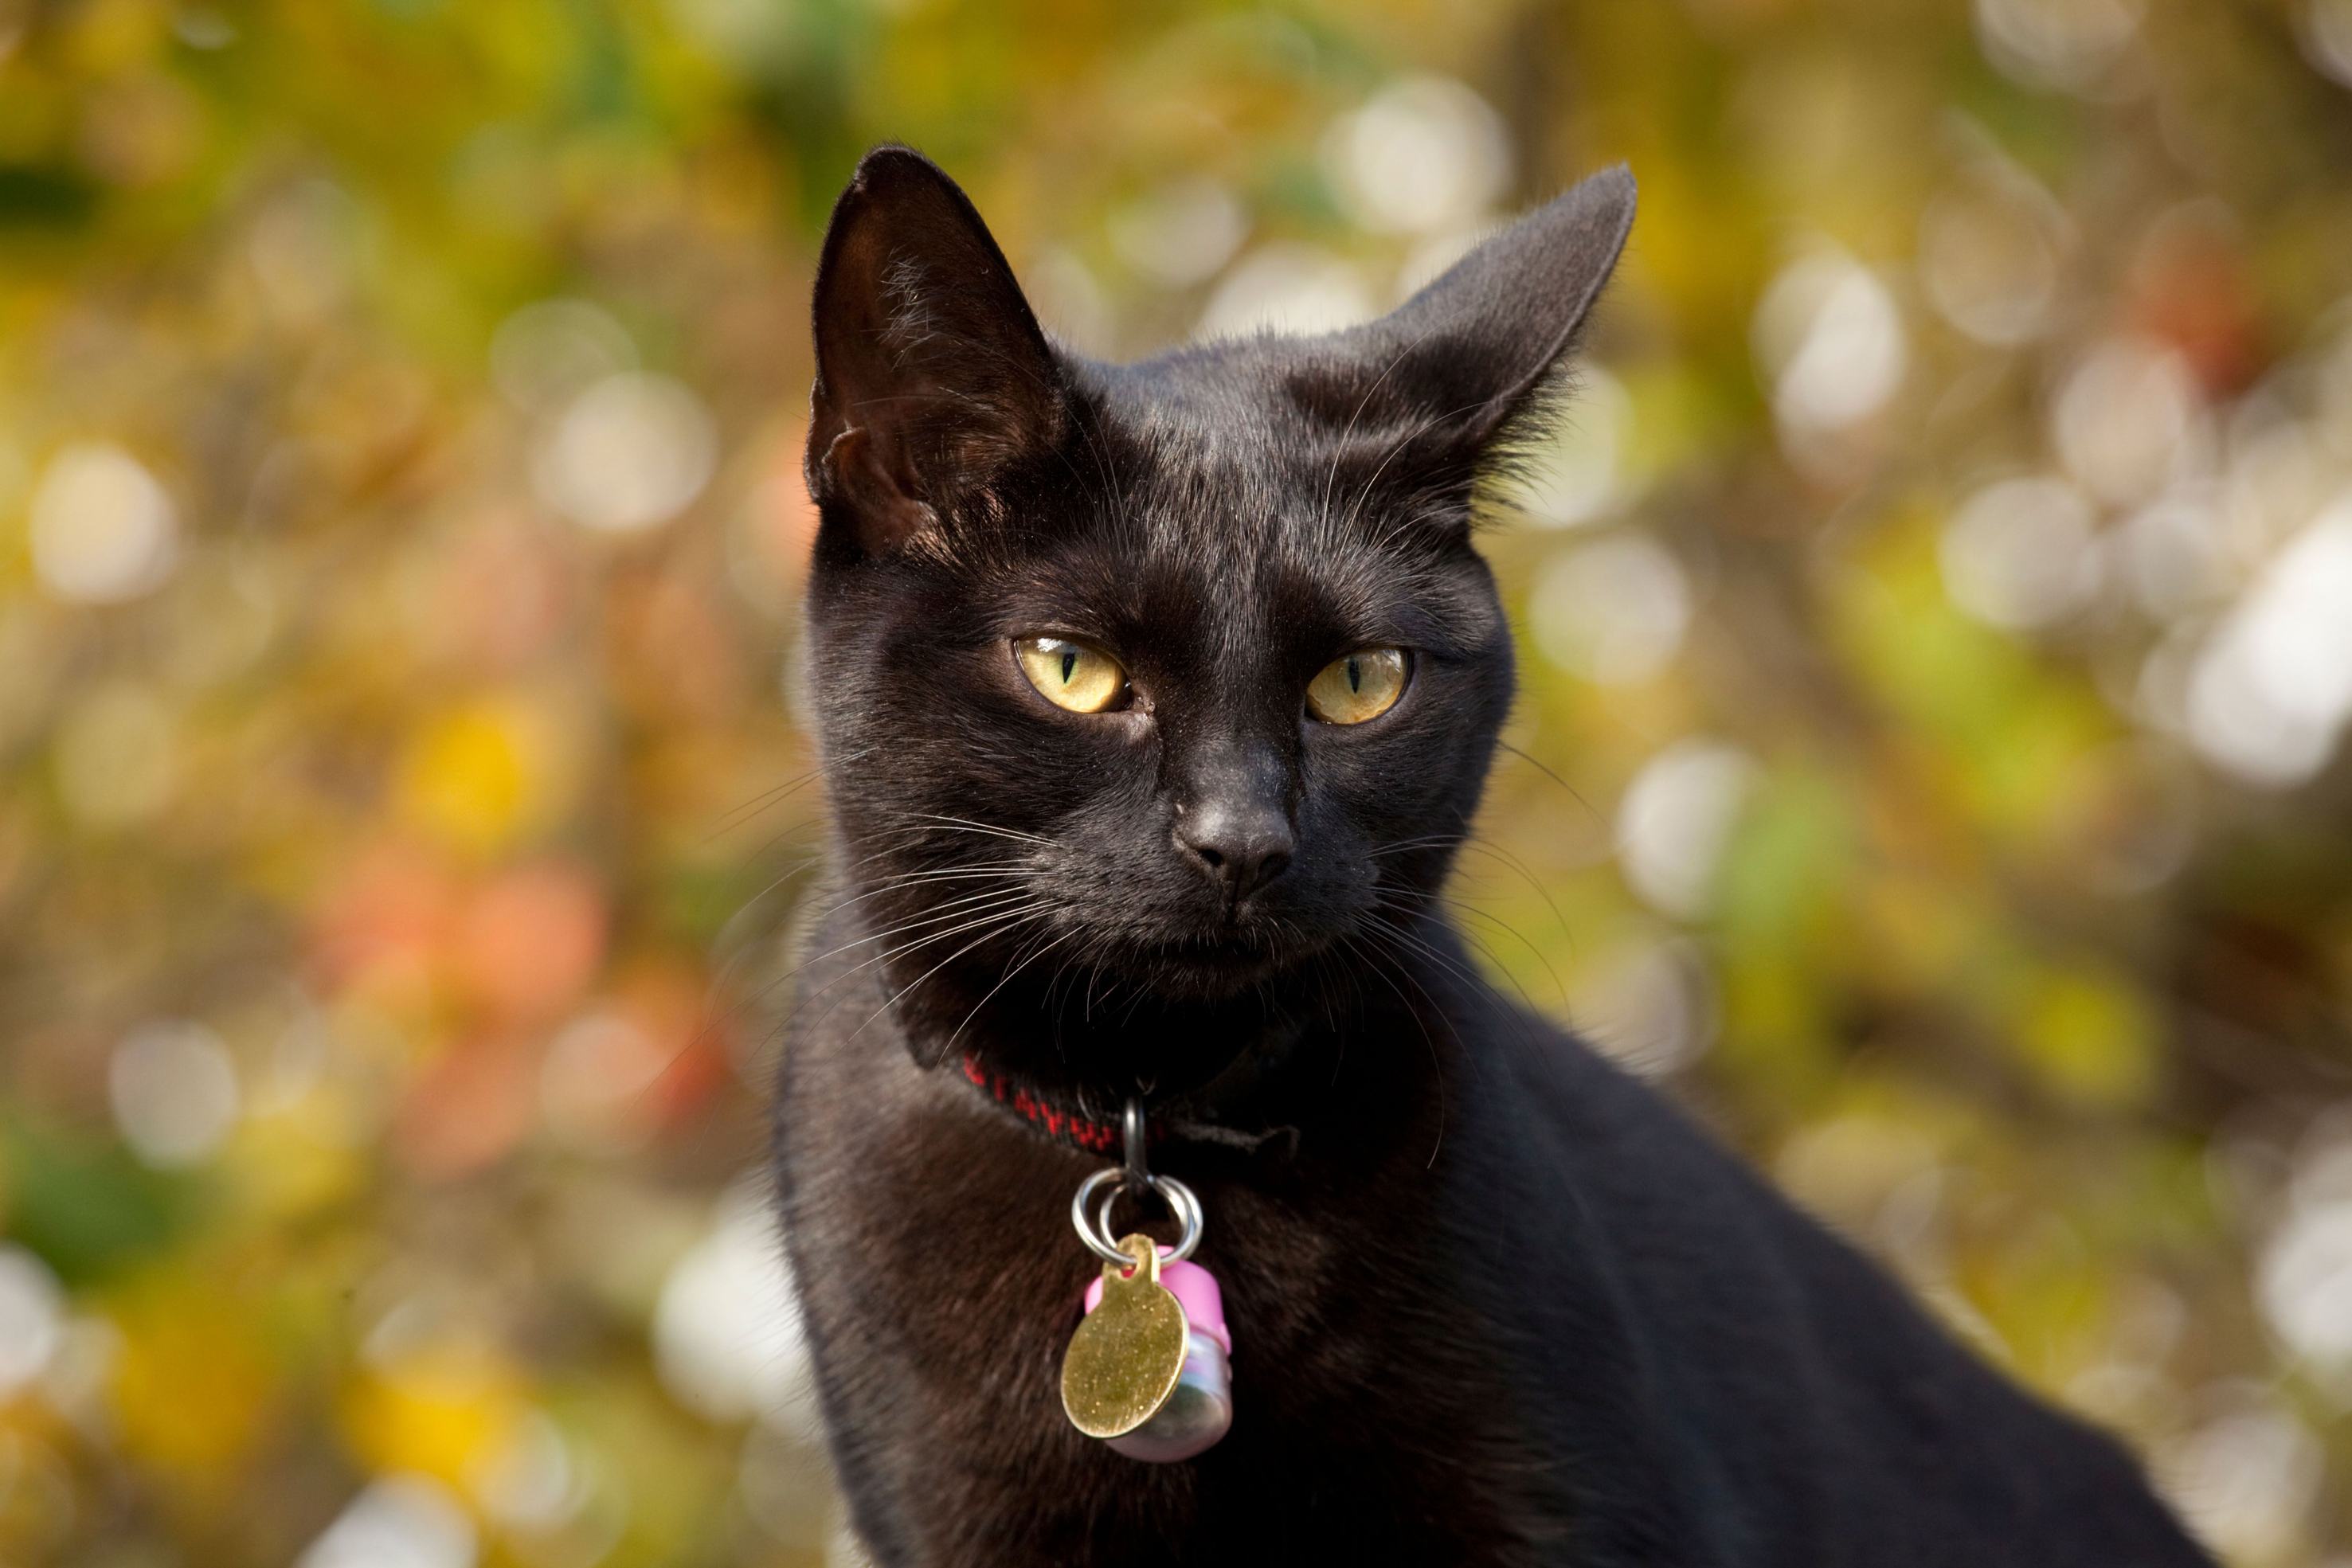 Black cat with identity collar